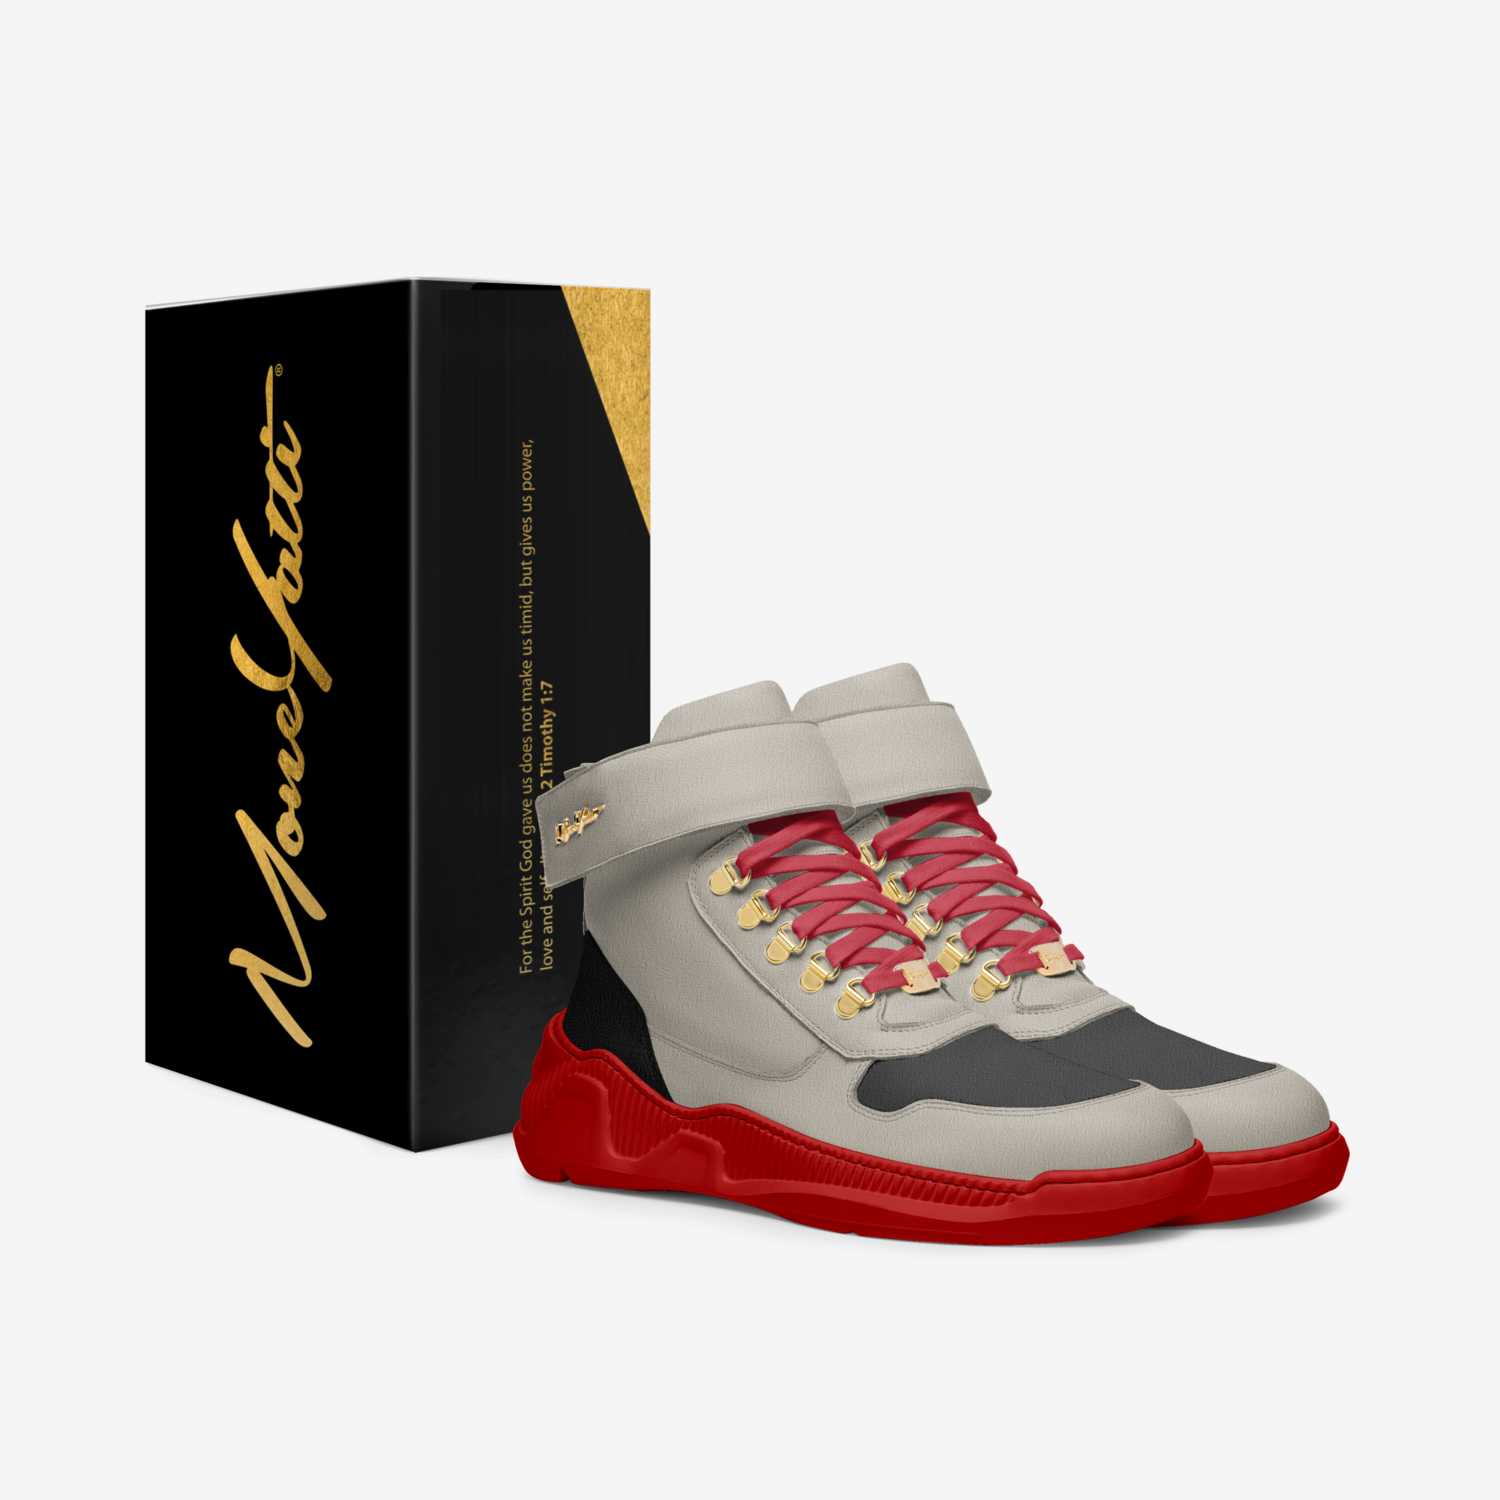 Moneyatti TrapS1 custom made in Italy shoes by Moneyatti Brand | Box view